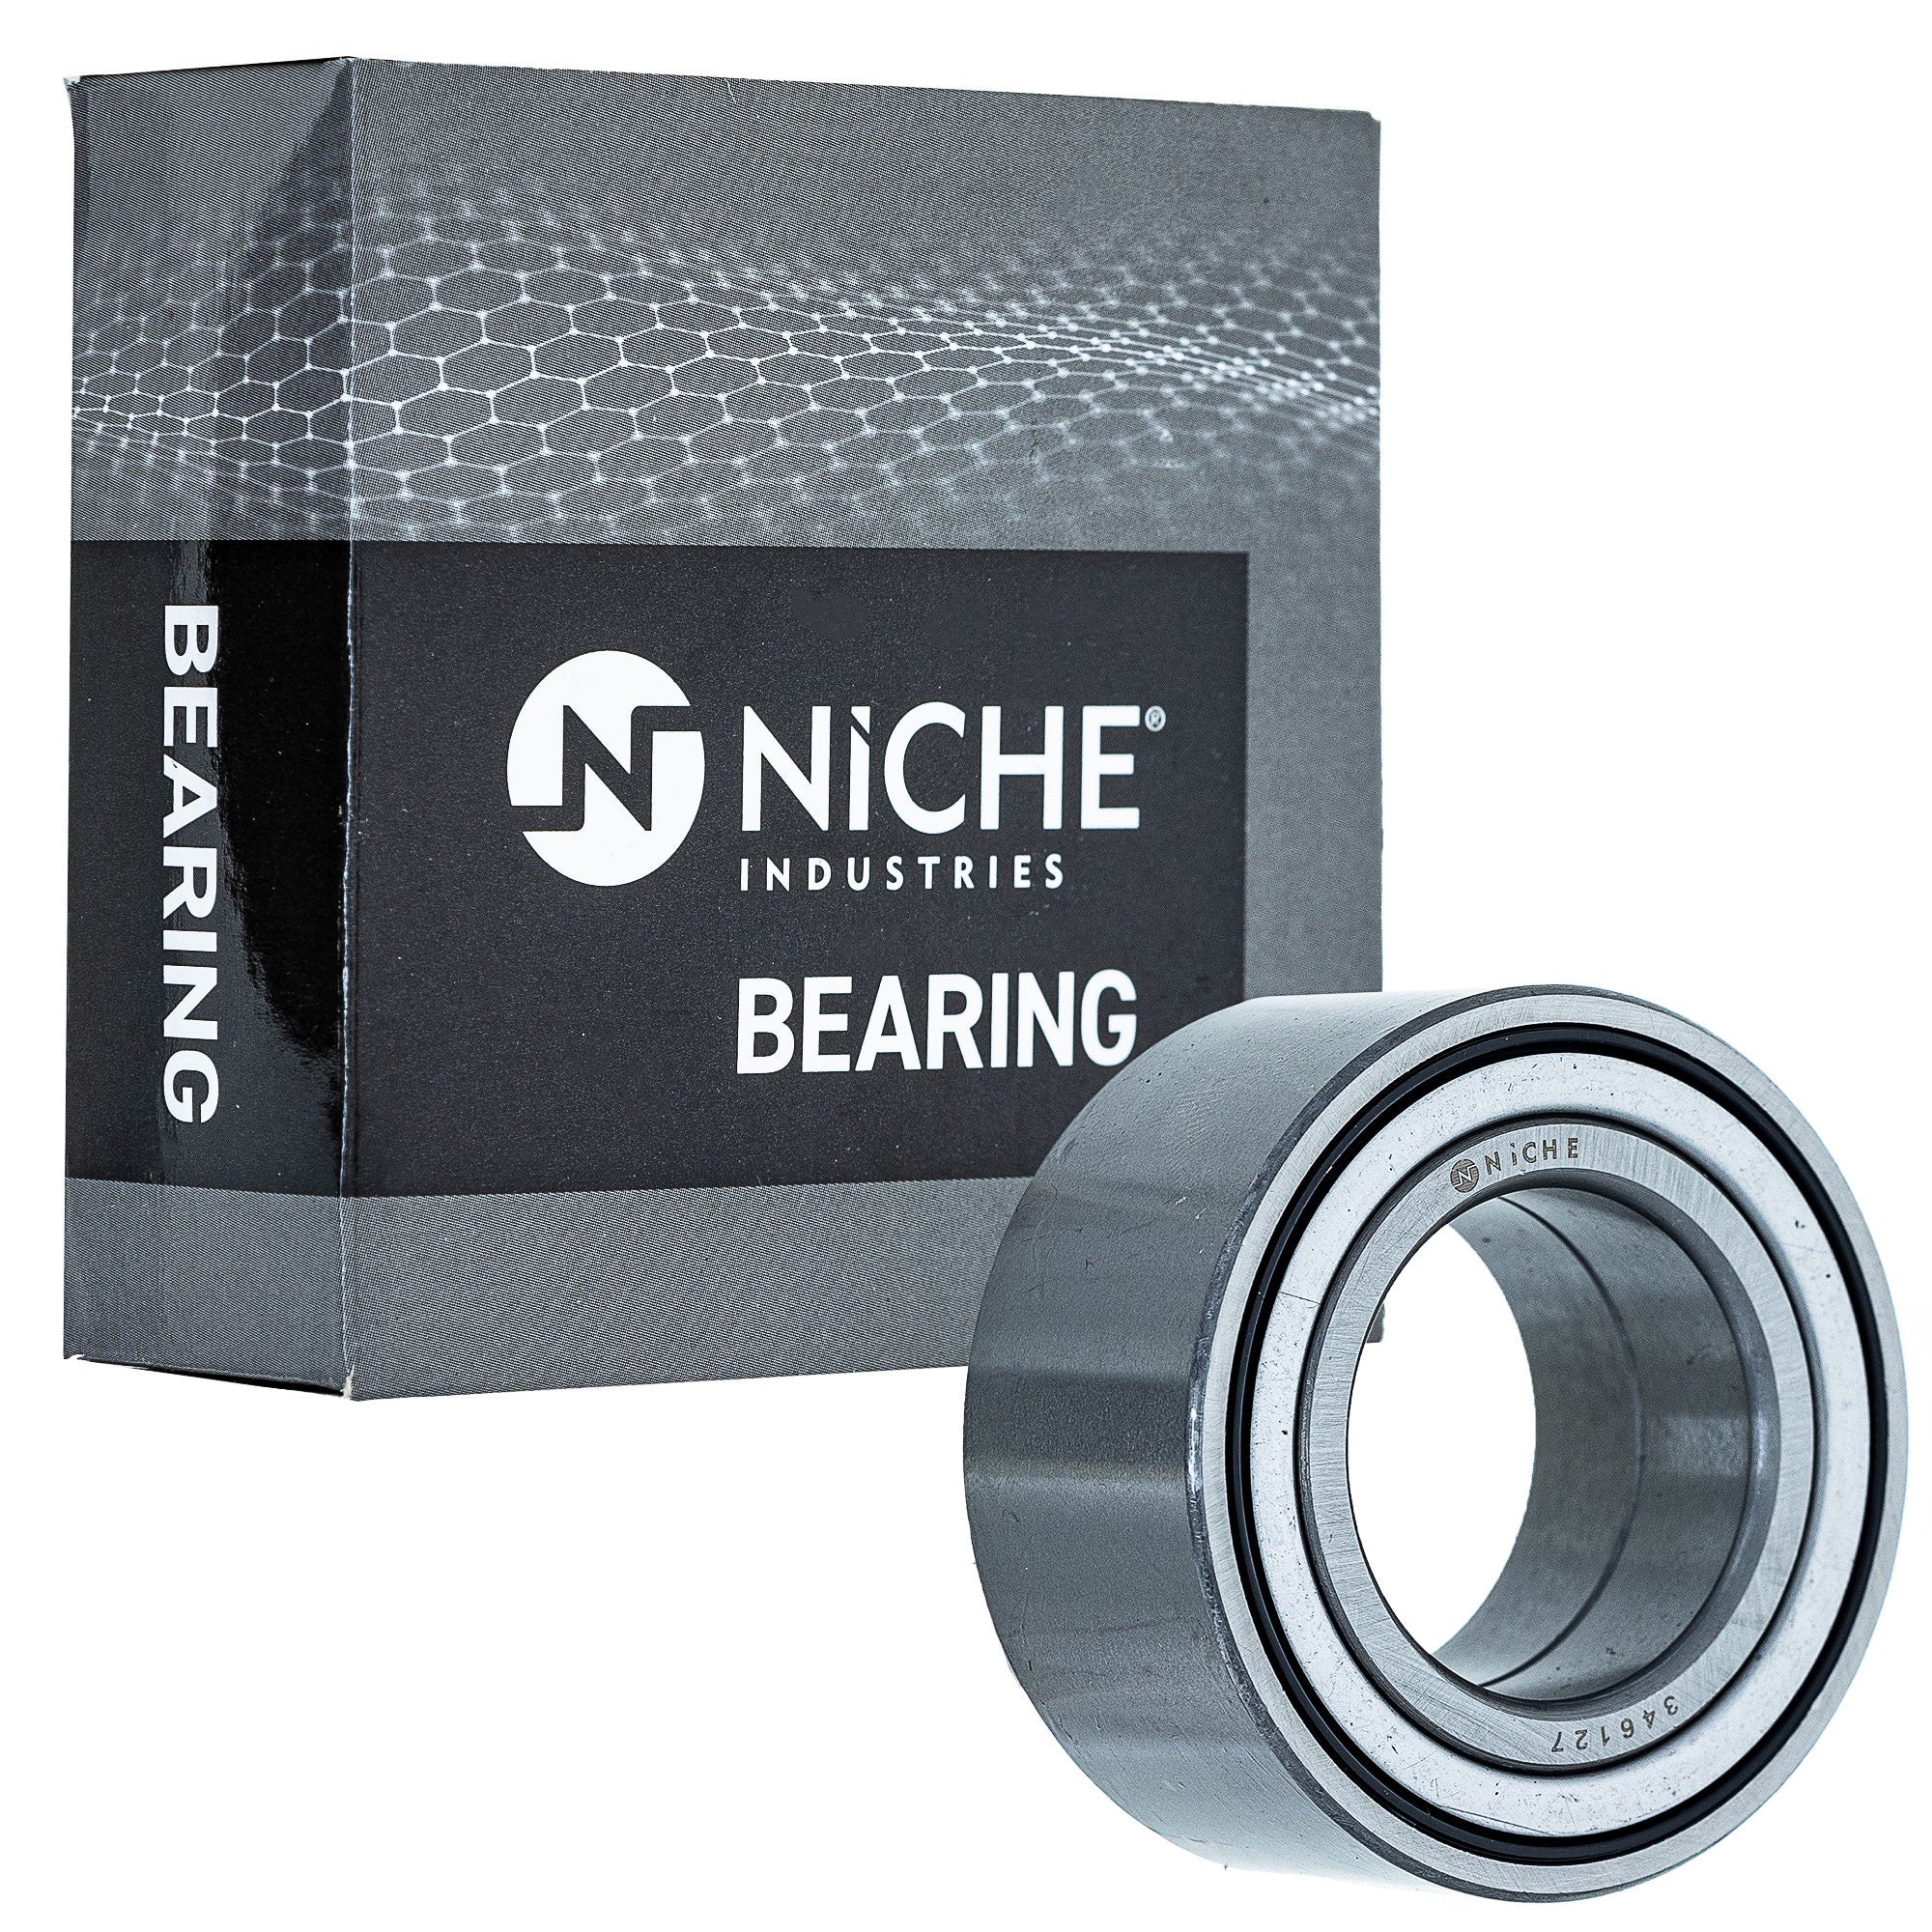 NICHE 519-CBB2293R Bearing 2-Pack for zOTHER TRX90 TRX700 TRX450